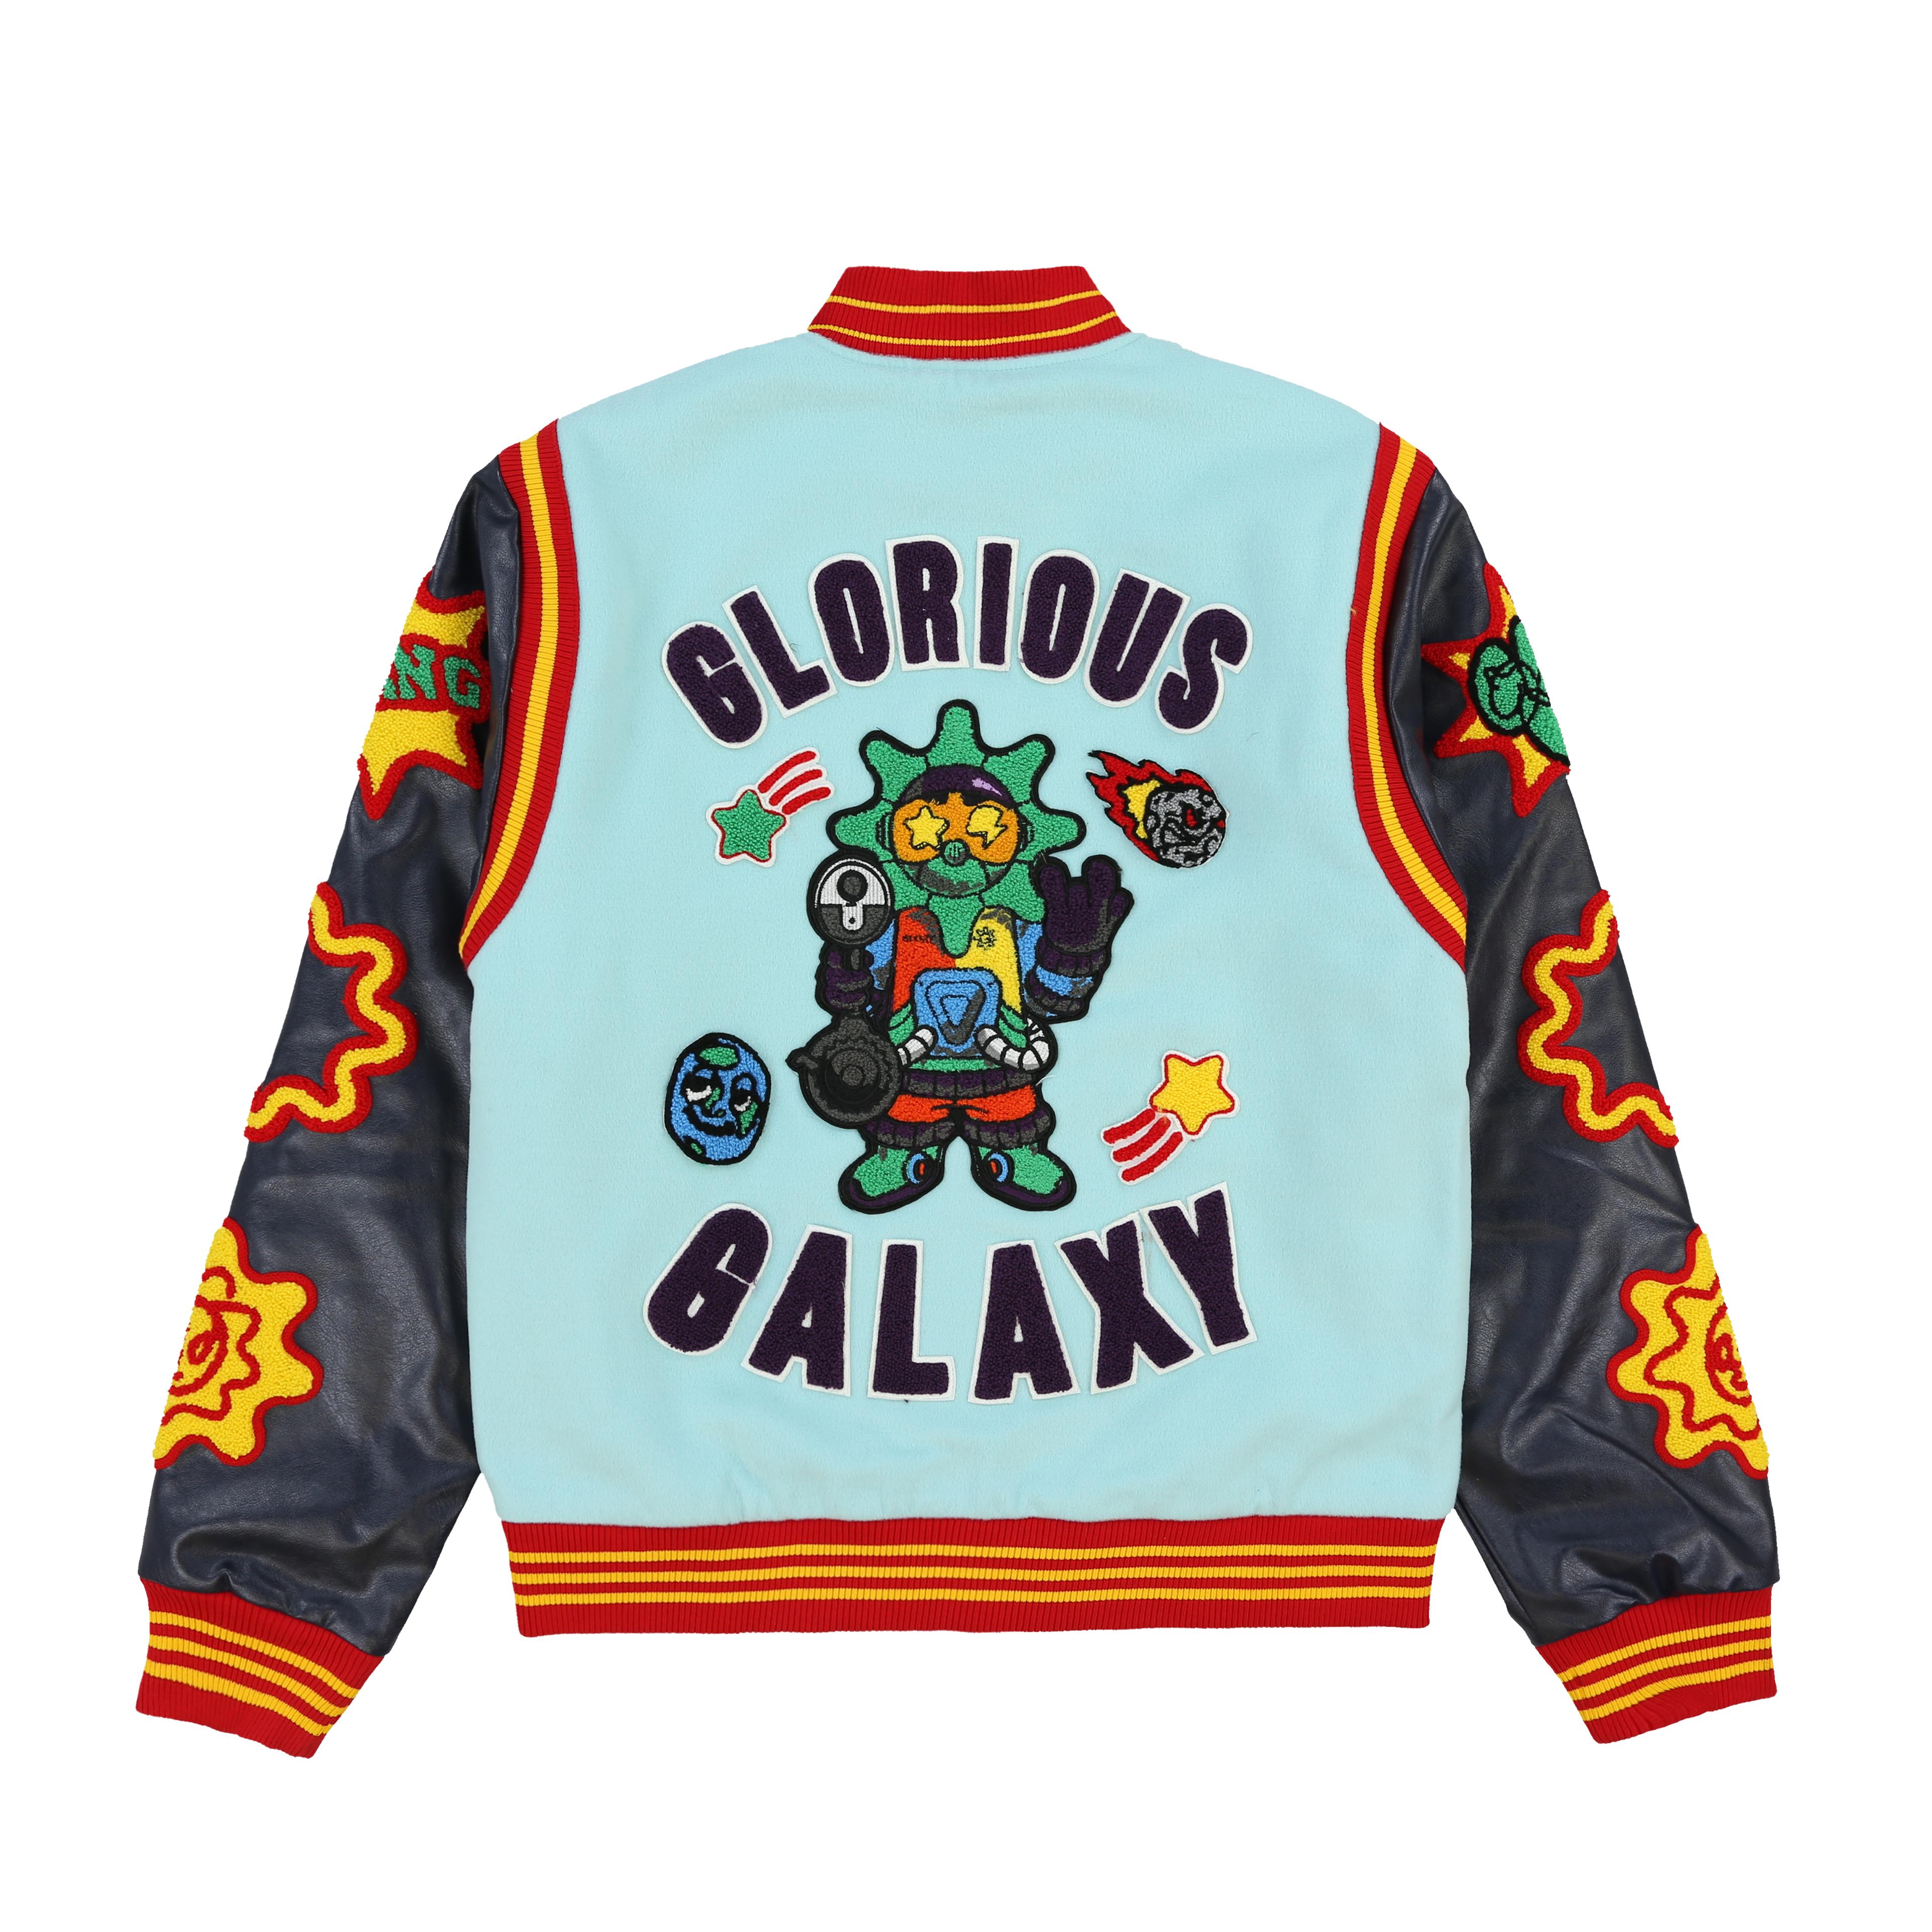 Alternate View 1 of Glorious Galaxy Varsity Jacket (Turquoise)